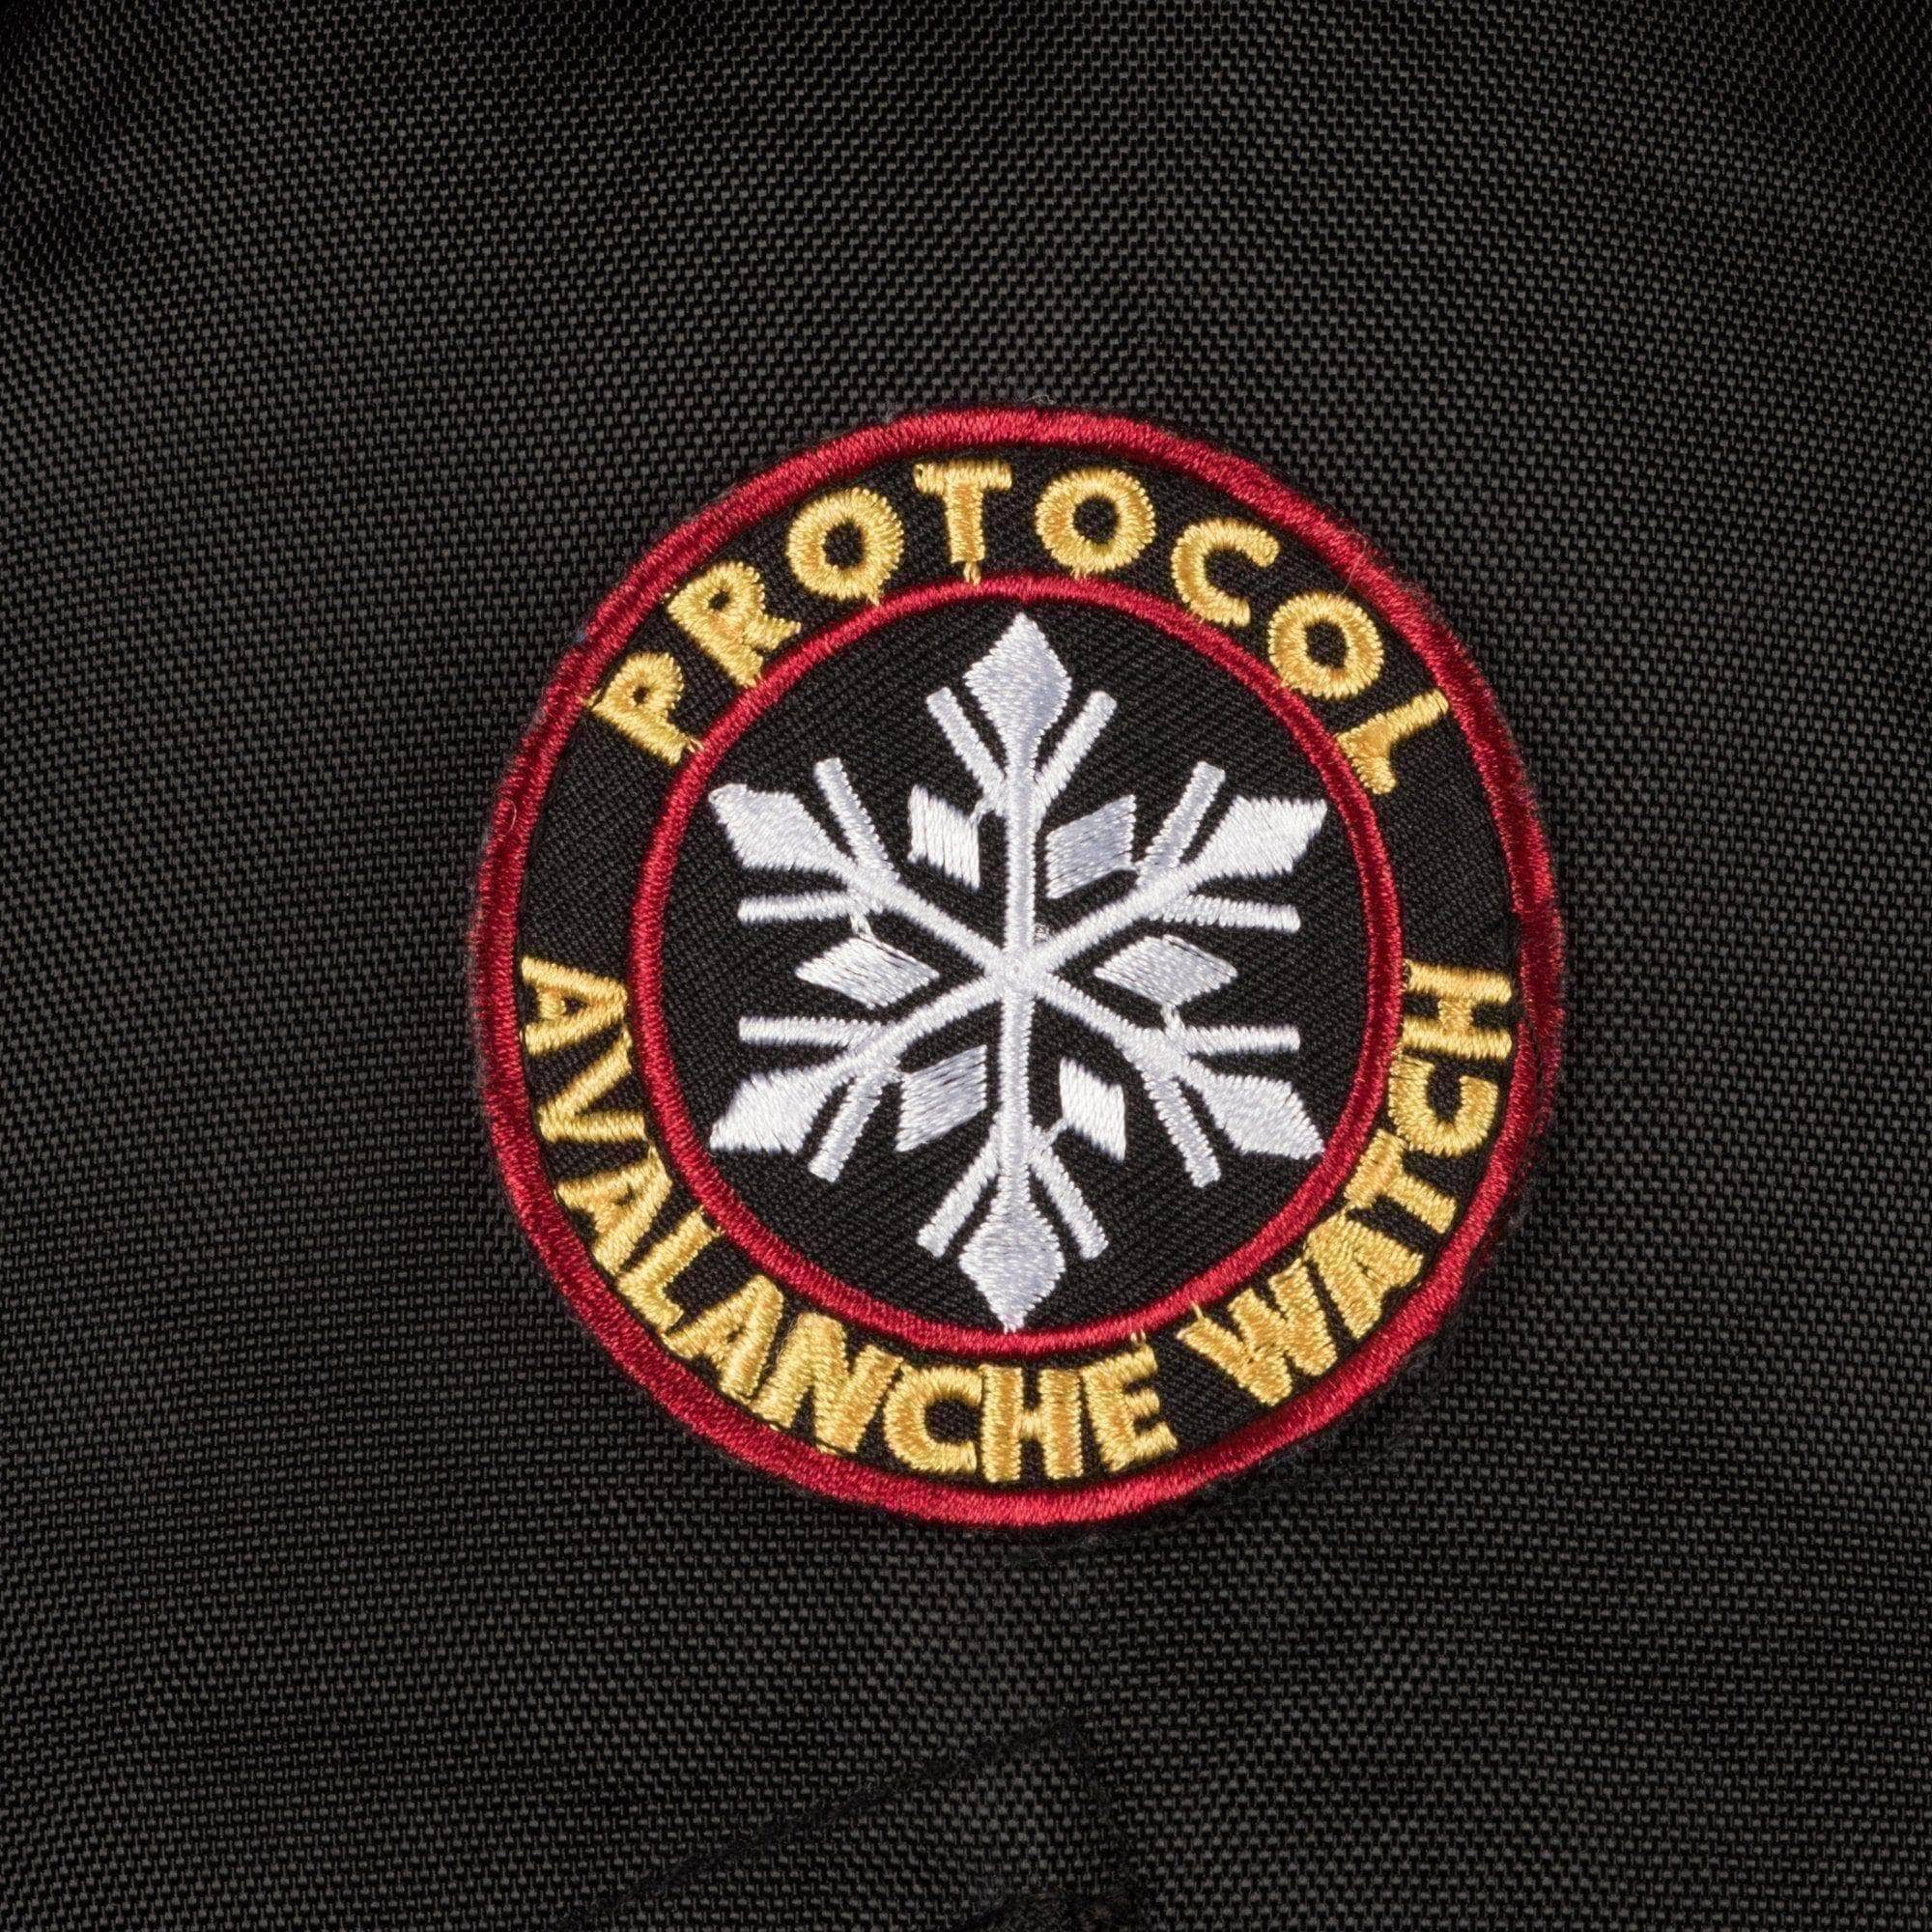 Protocol Jacket - Men's